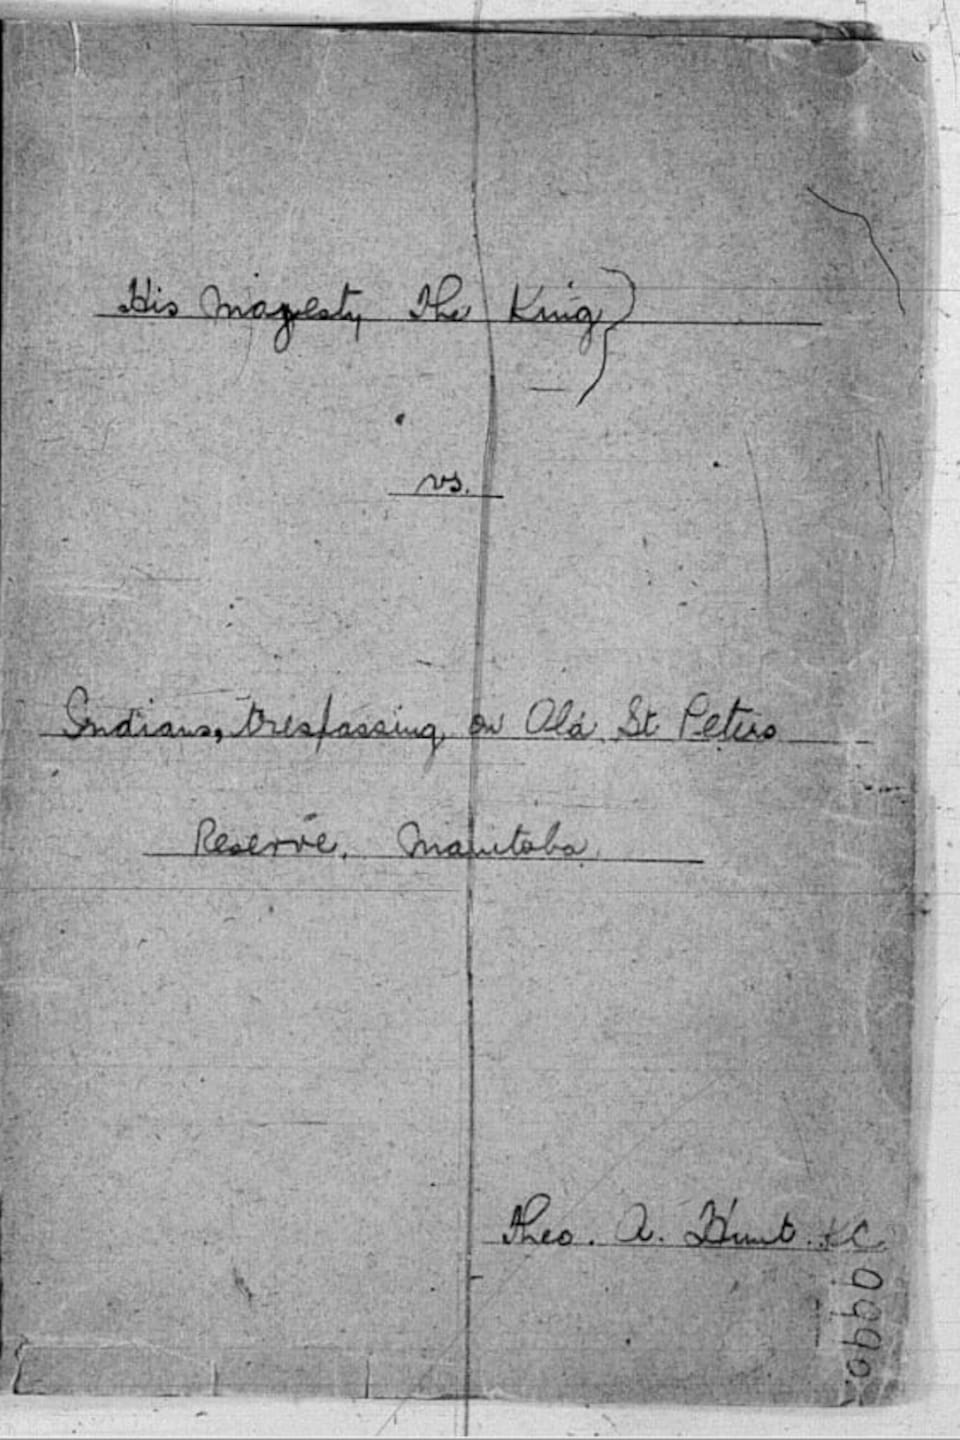 An archival court document